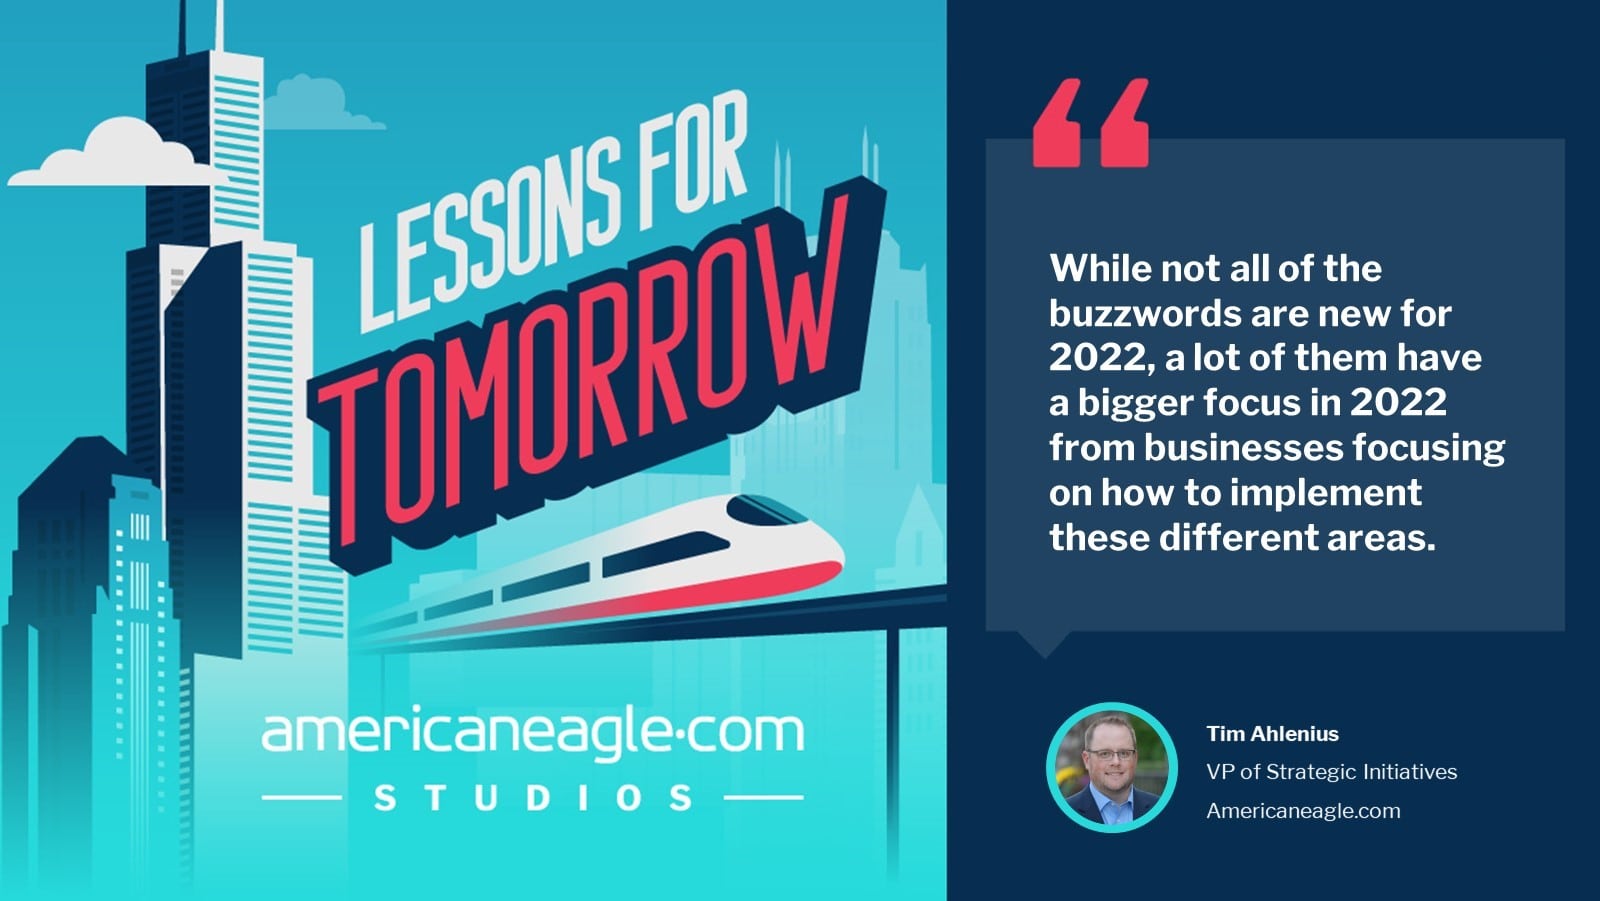 Tim Ahlenius explains how businesses are using buzzwords in 2022